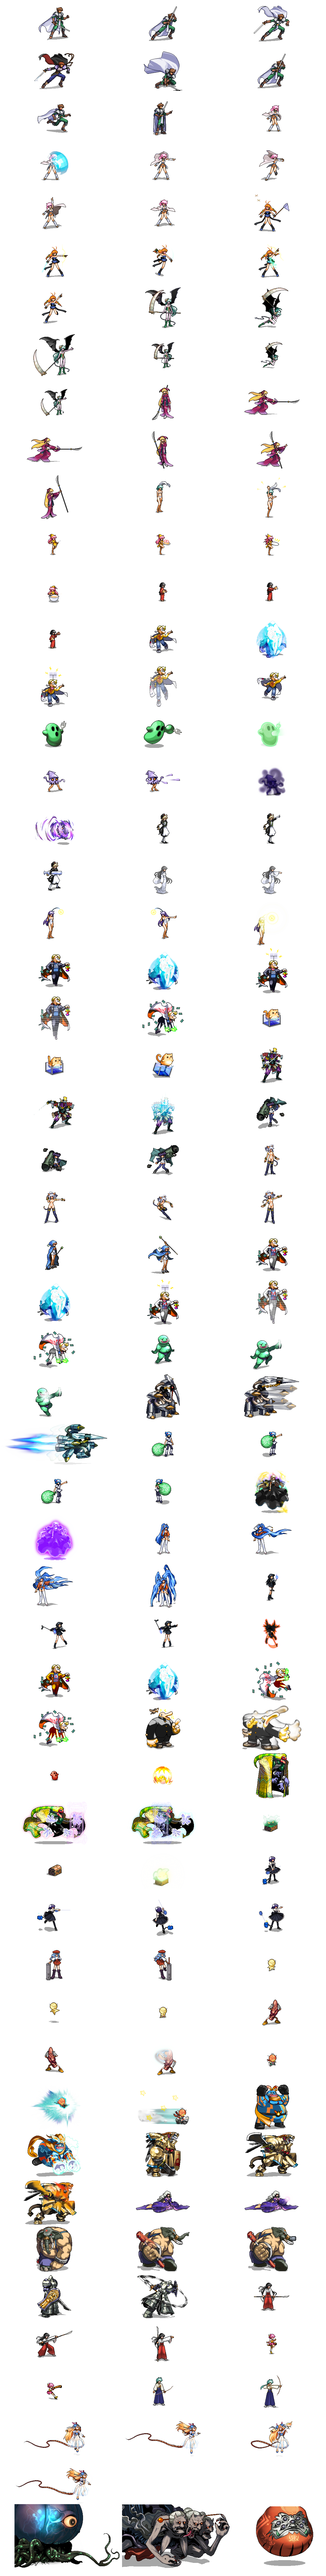 Battle Characters